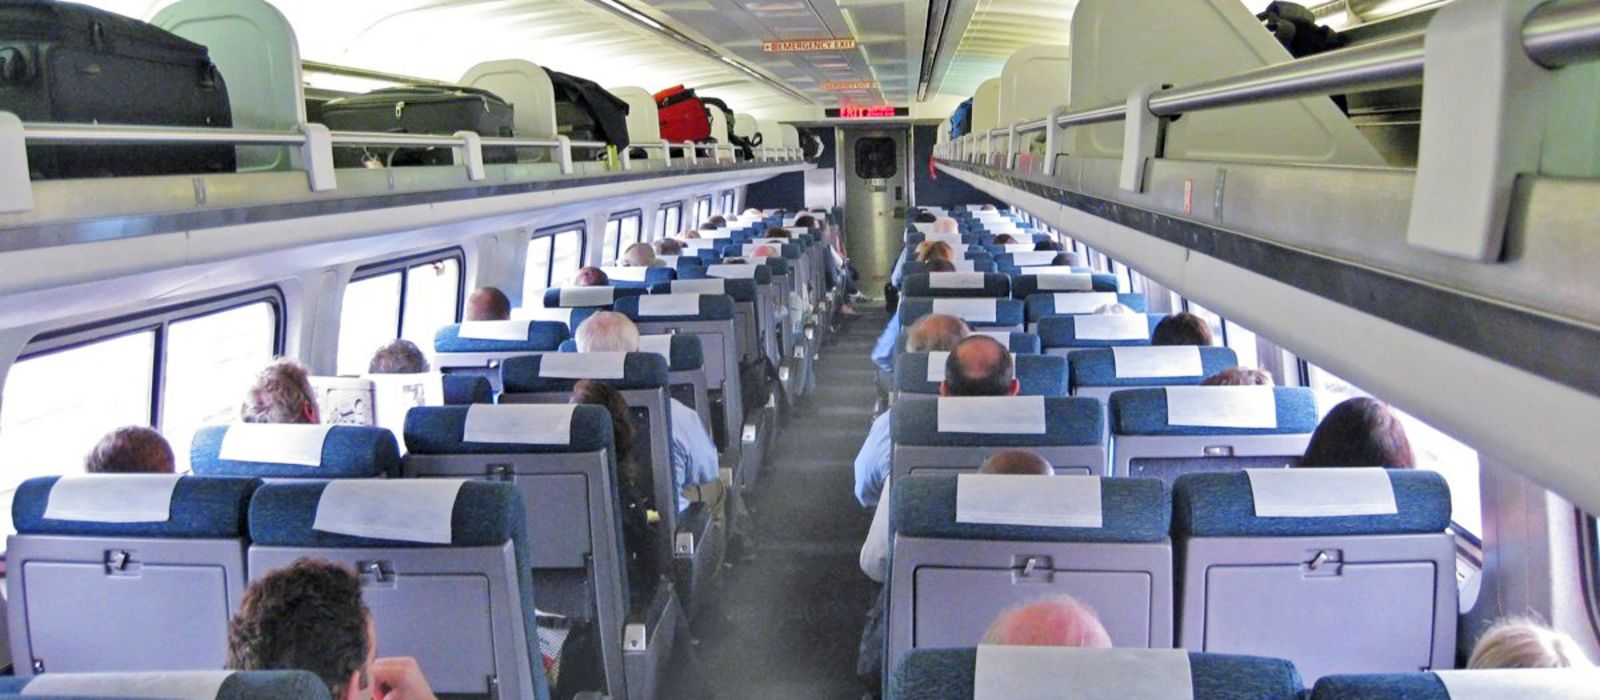 Impression Amtrak Coach Class